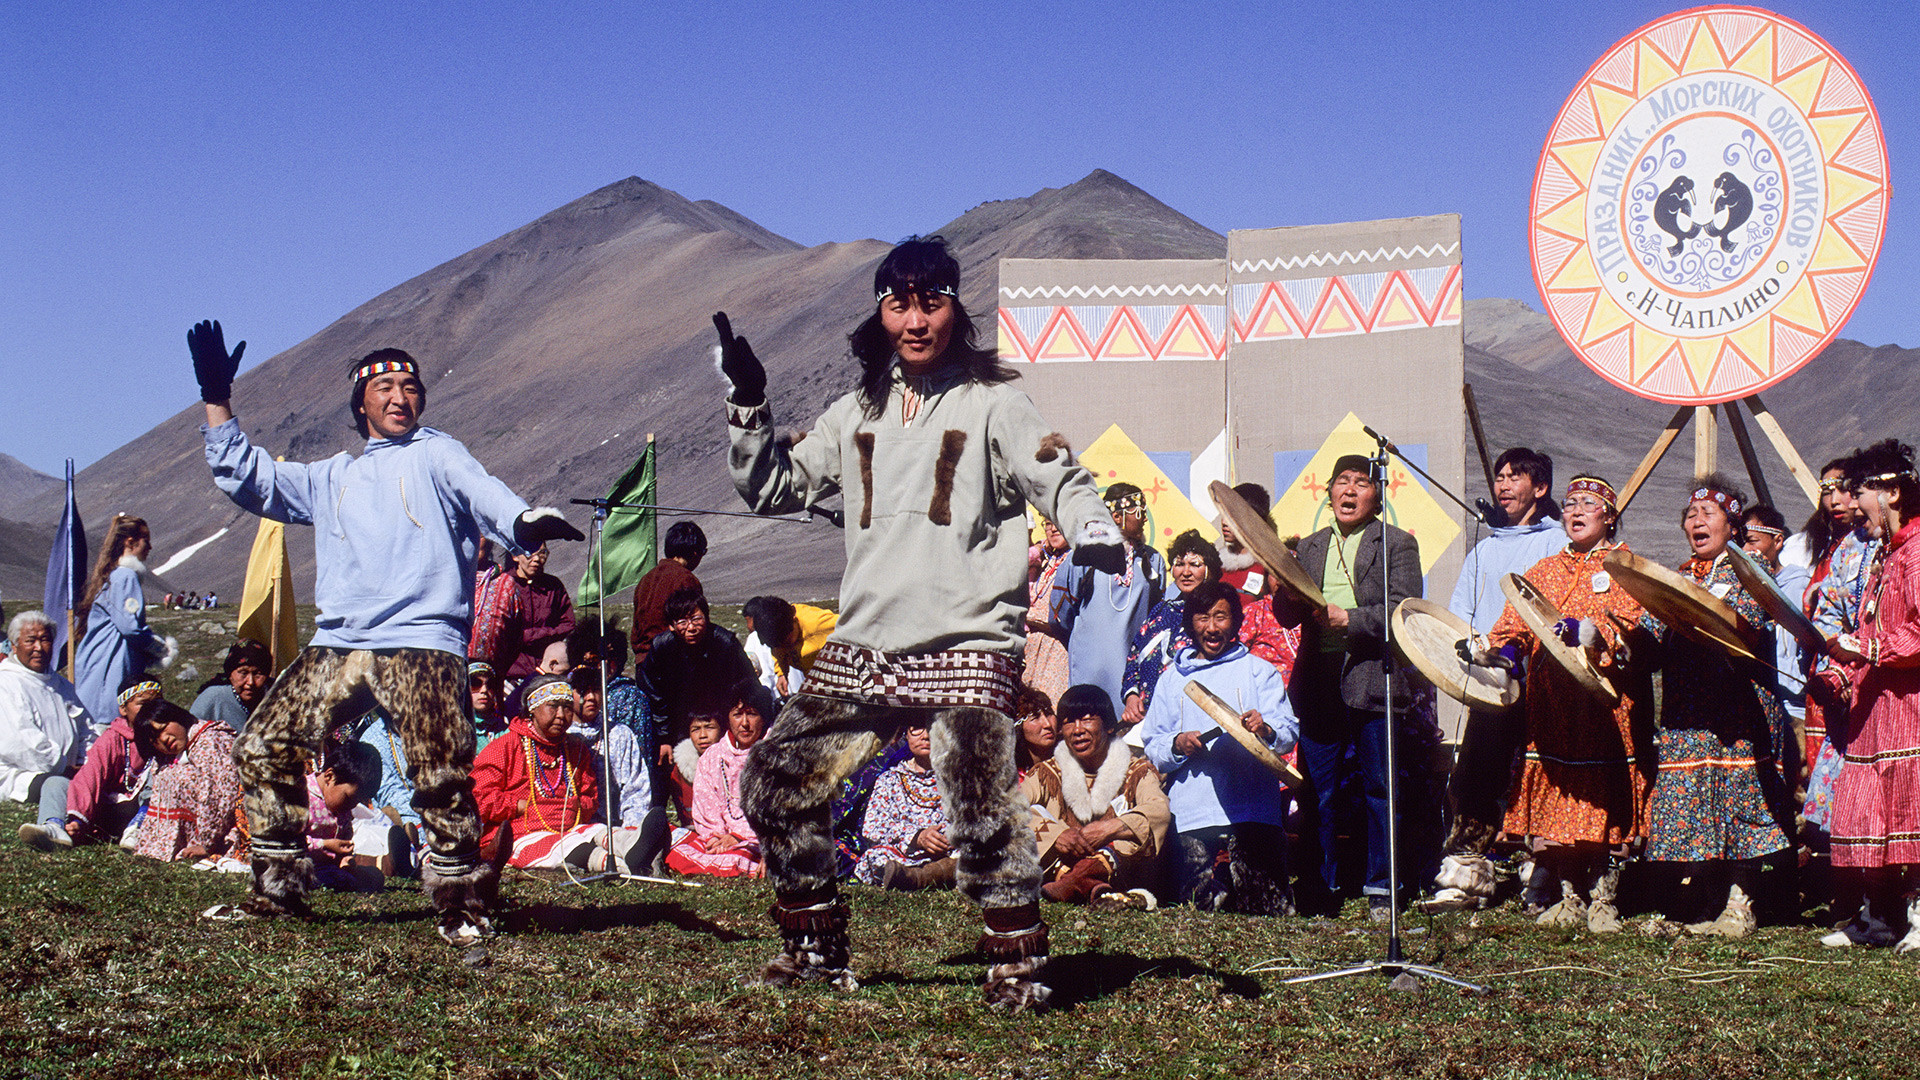 Orang eskimo menarikan tarian tradisional pada festival pemburu di Magadanskaya Oblast, Chukotskiy, Novoye Chaplino.